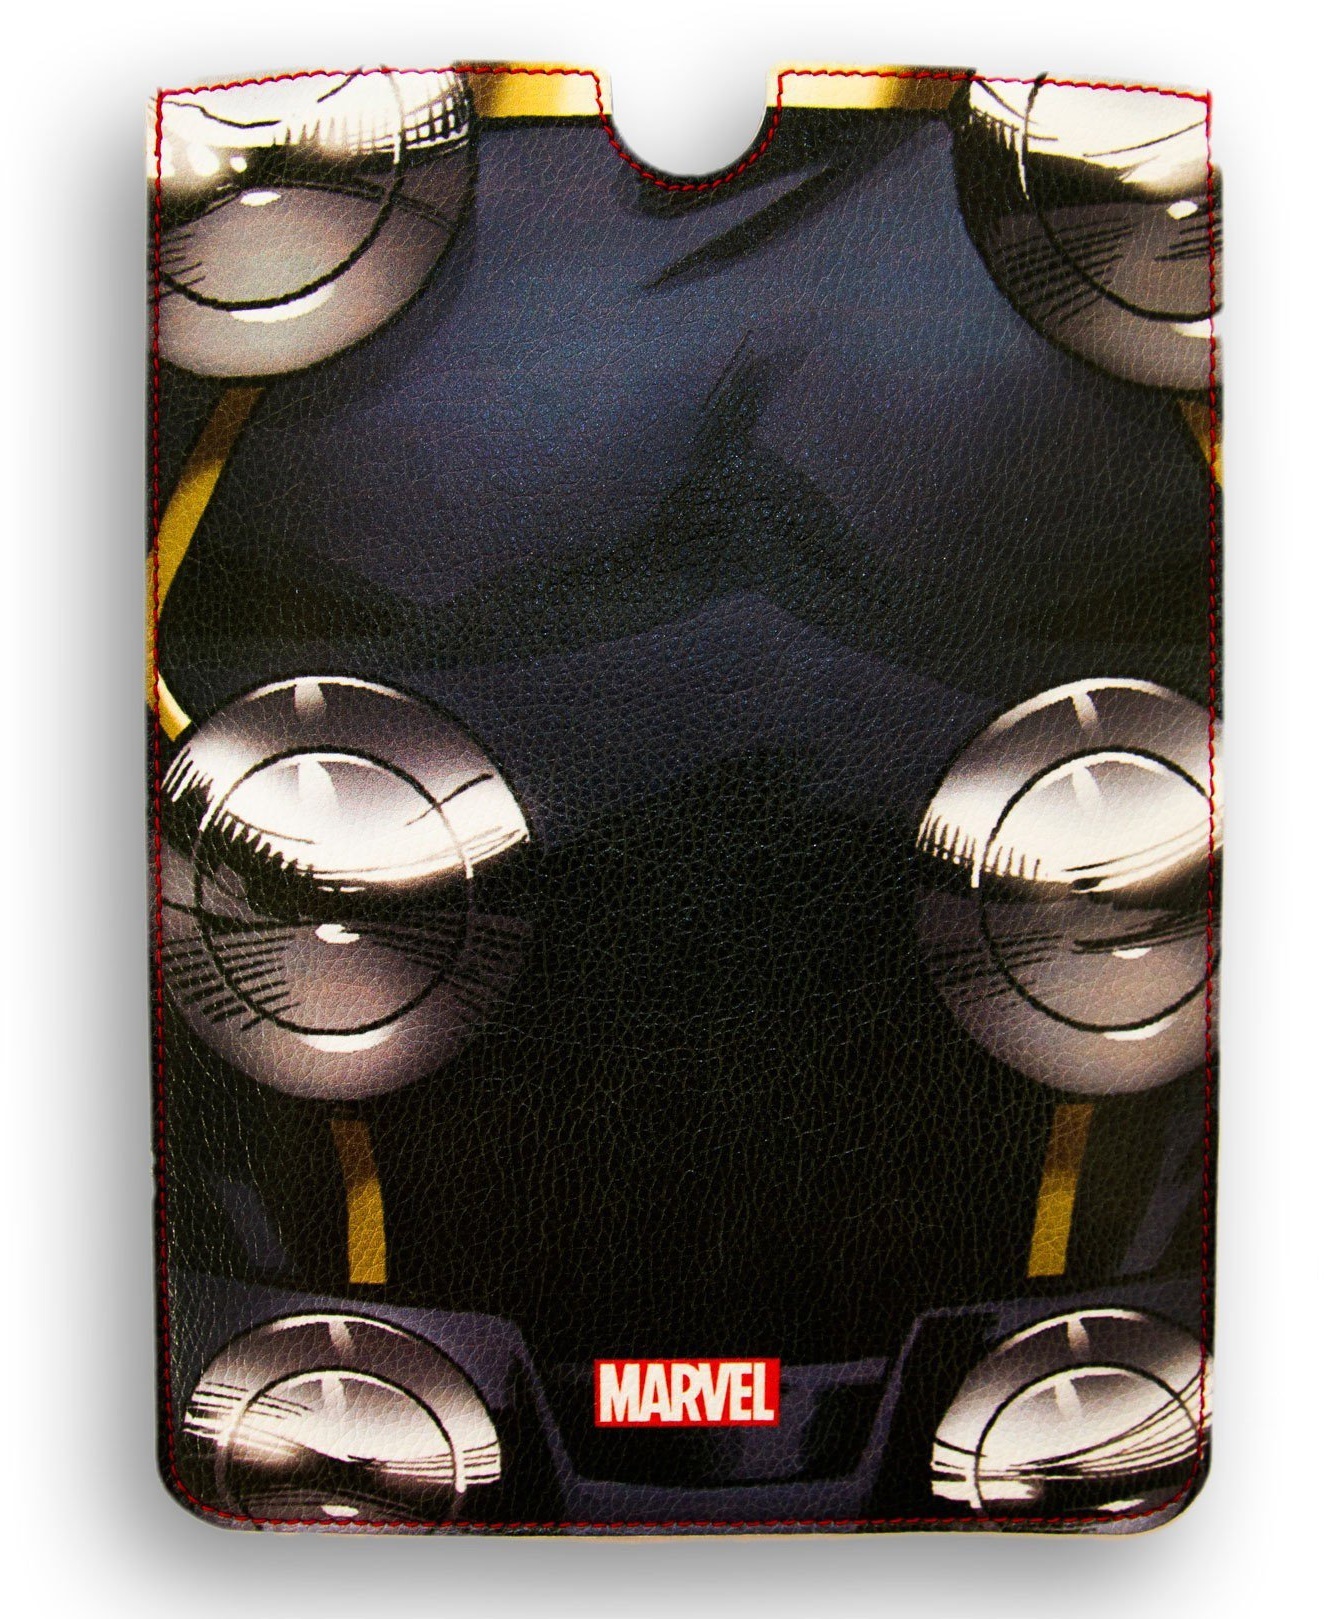 PielFort Schutzhülle für iPad 2-3 Deluxe Leather Sleeve Marvel The Armor